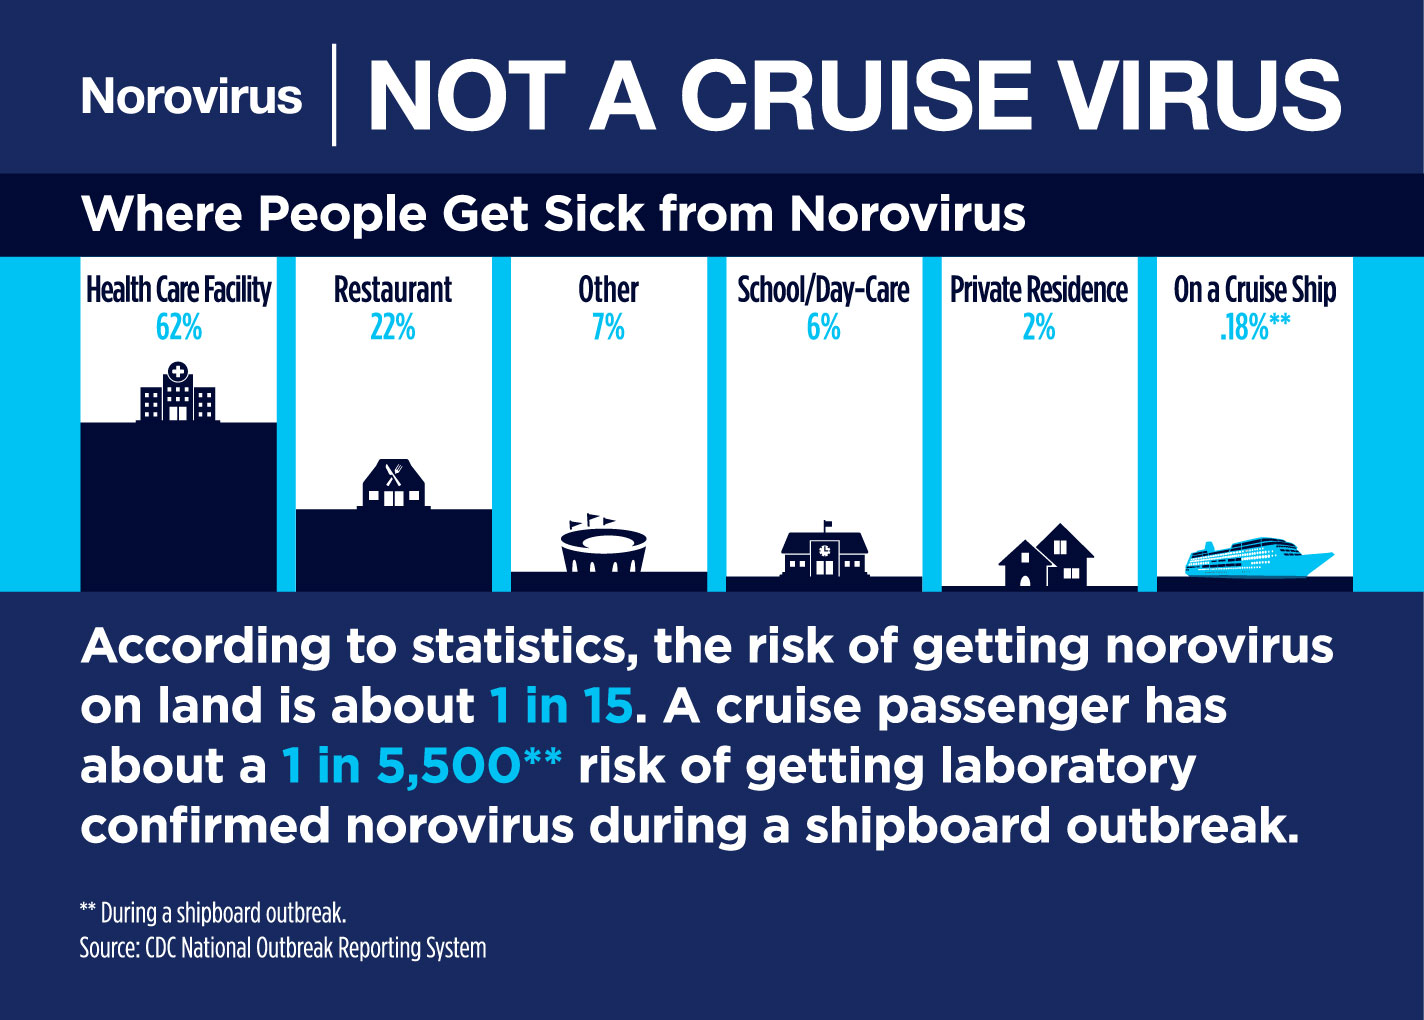 do cruise ships stock antibiotics